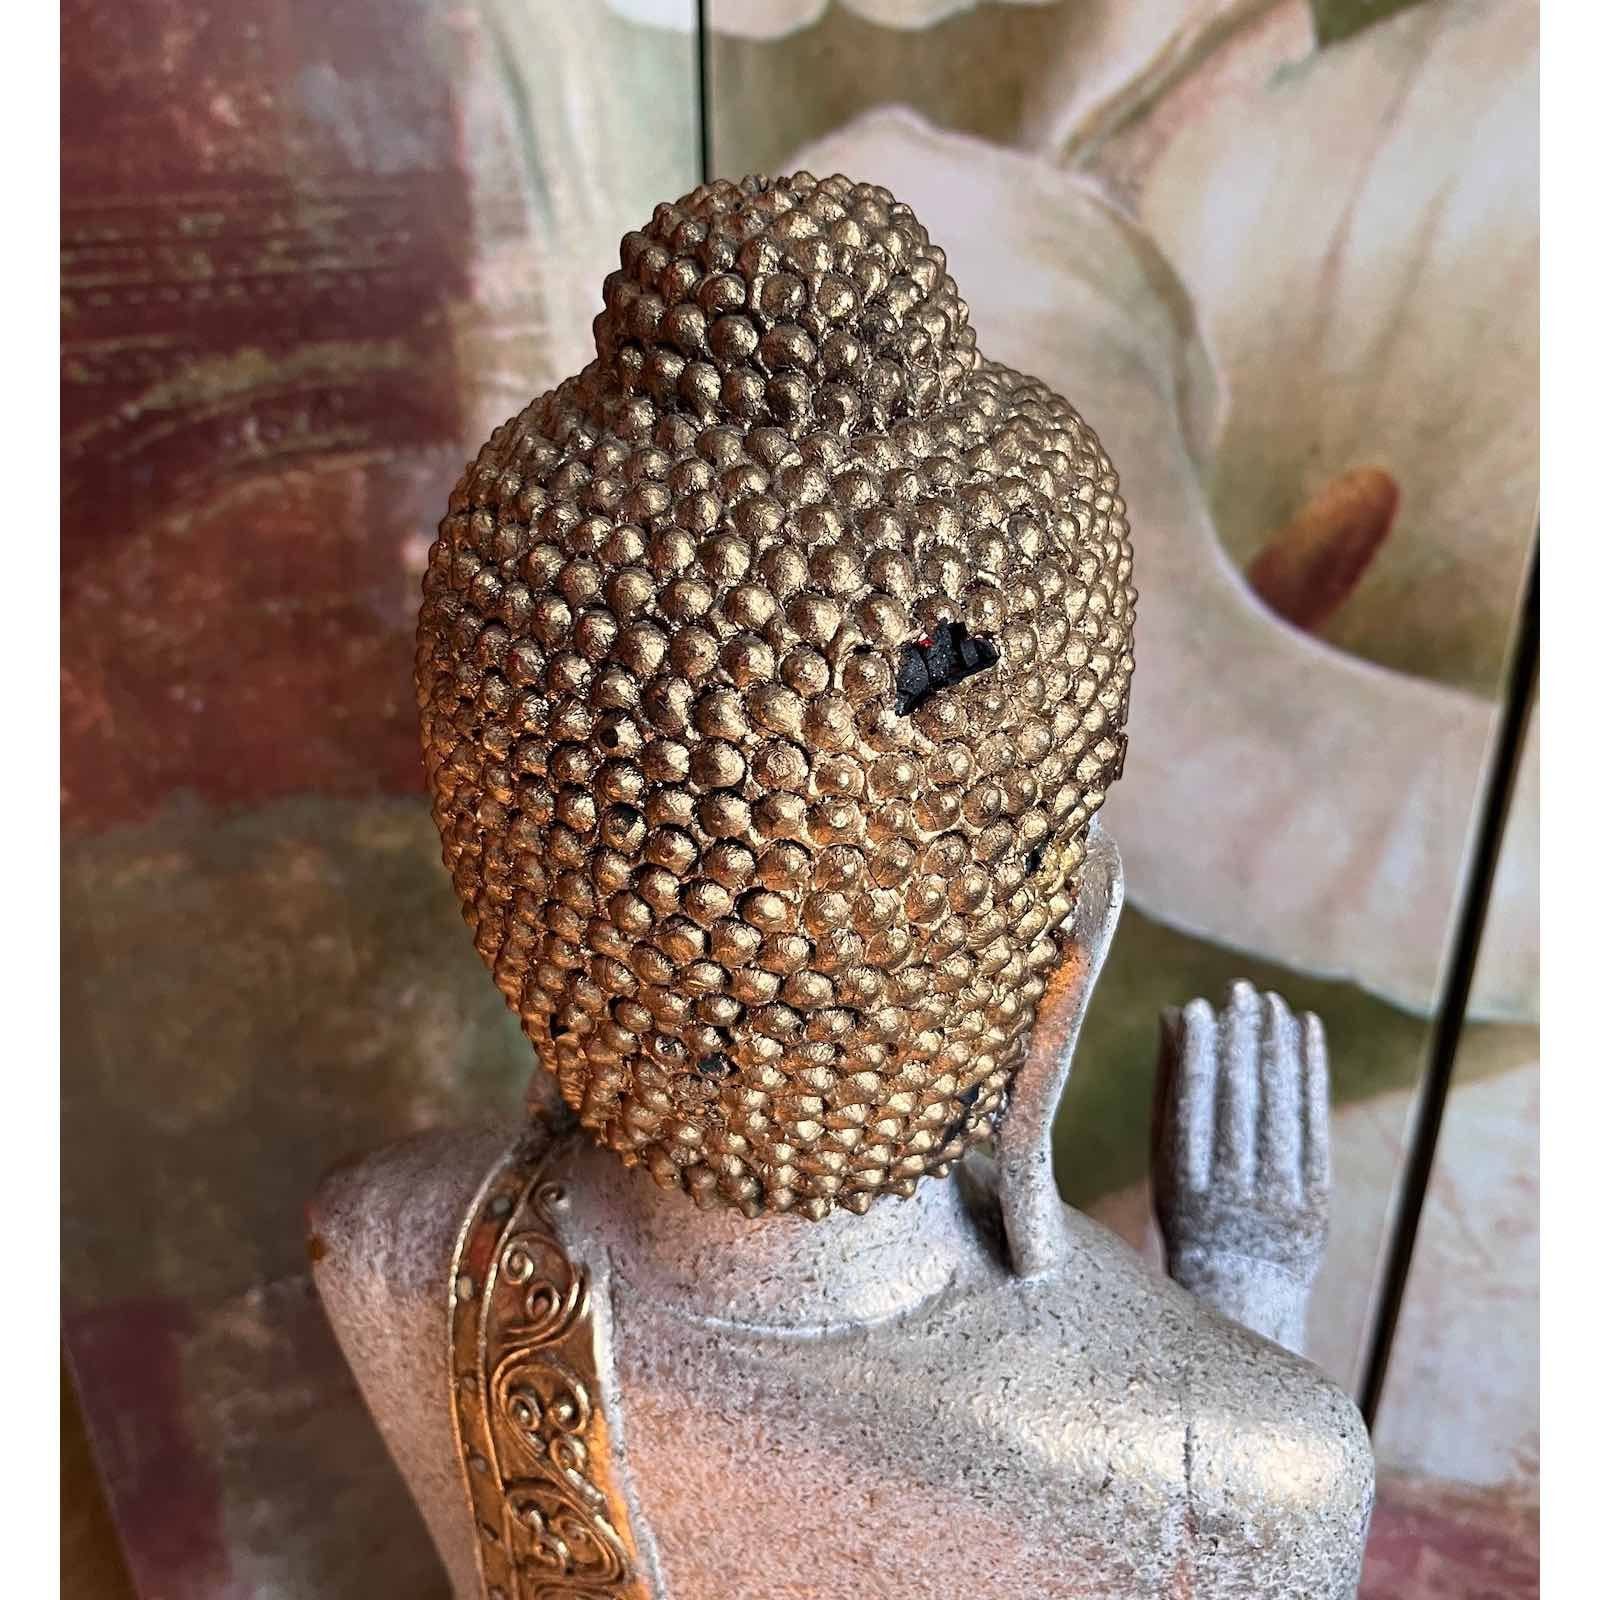 Buddhafigur 108cm Asien Holz Figur LifeStyle Buddha Montags Thailand groß